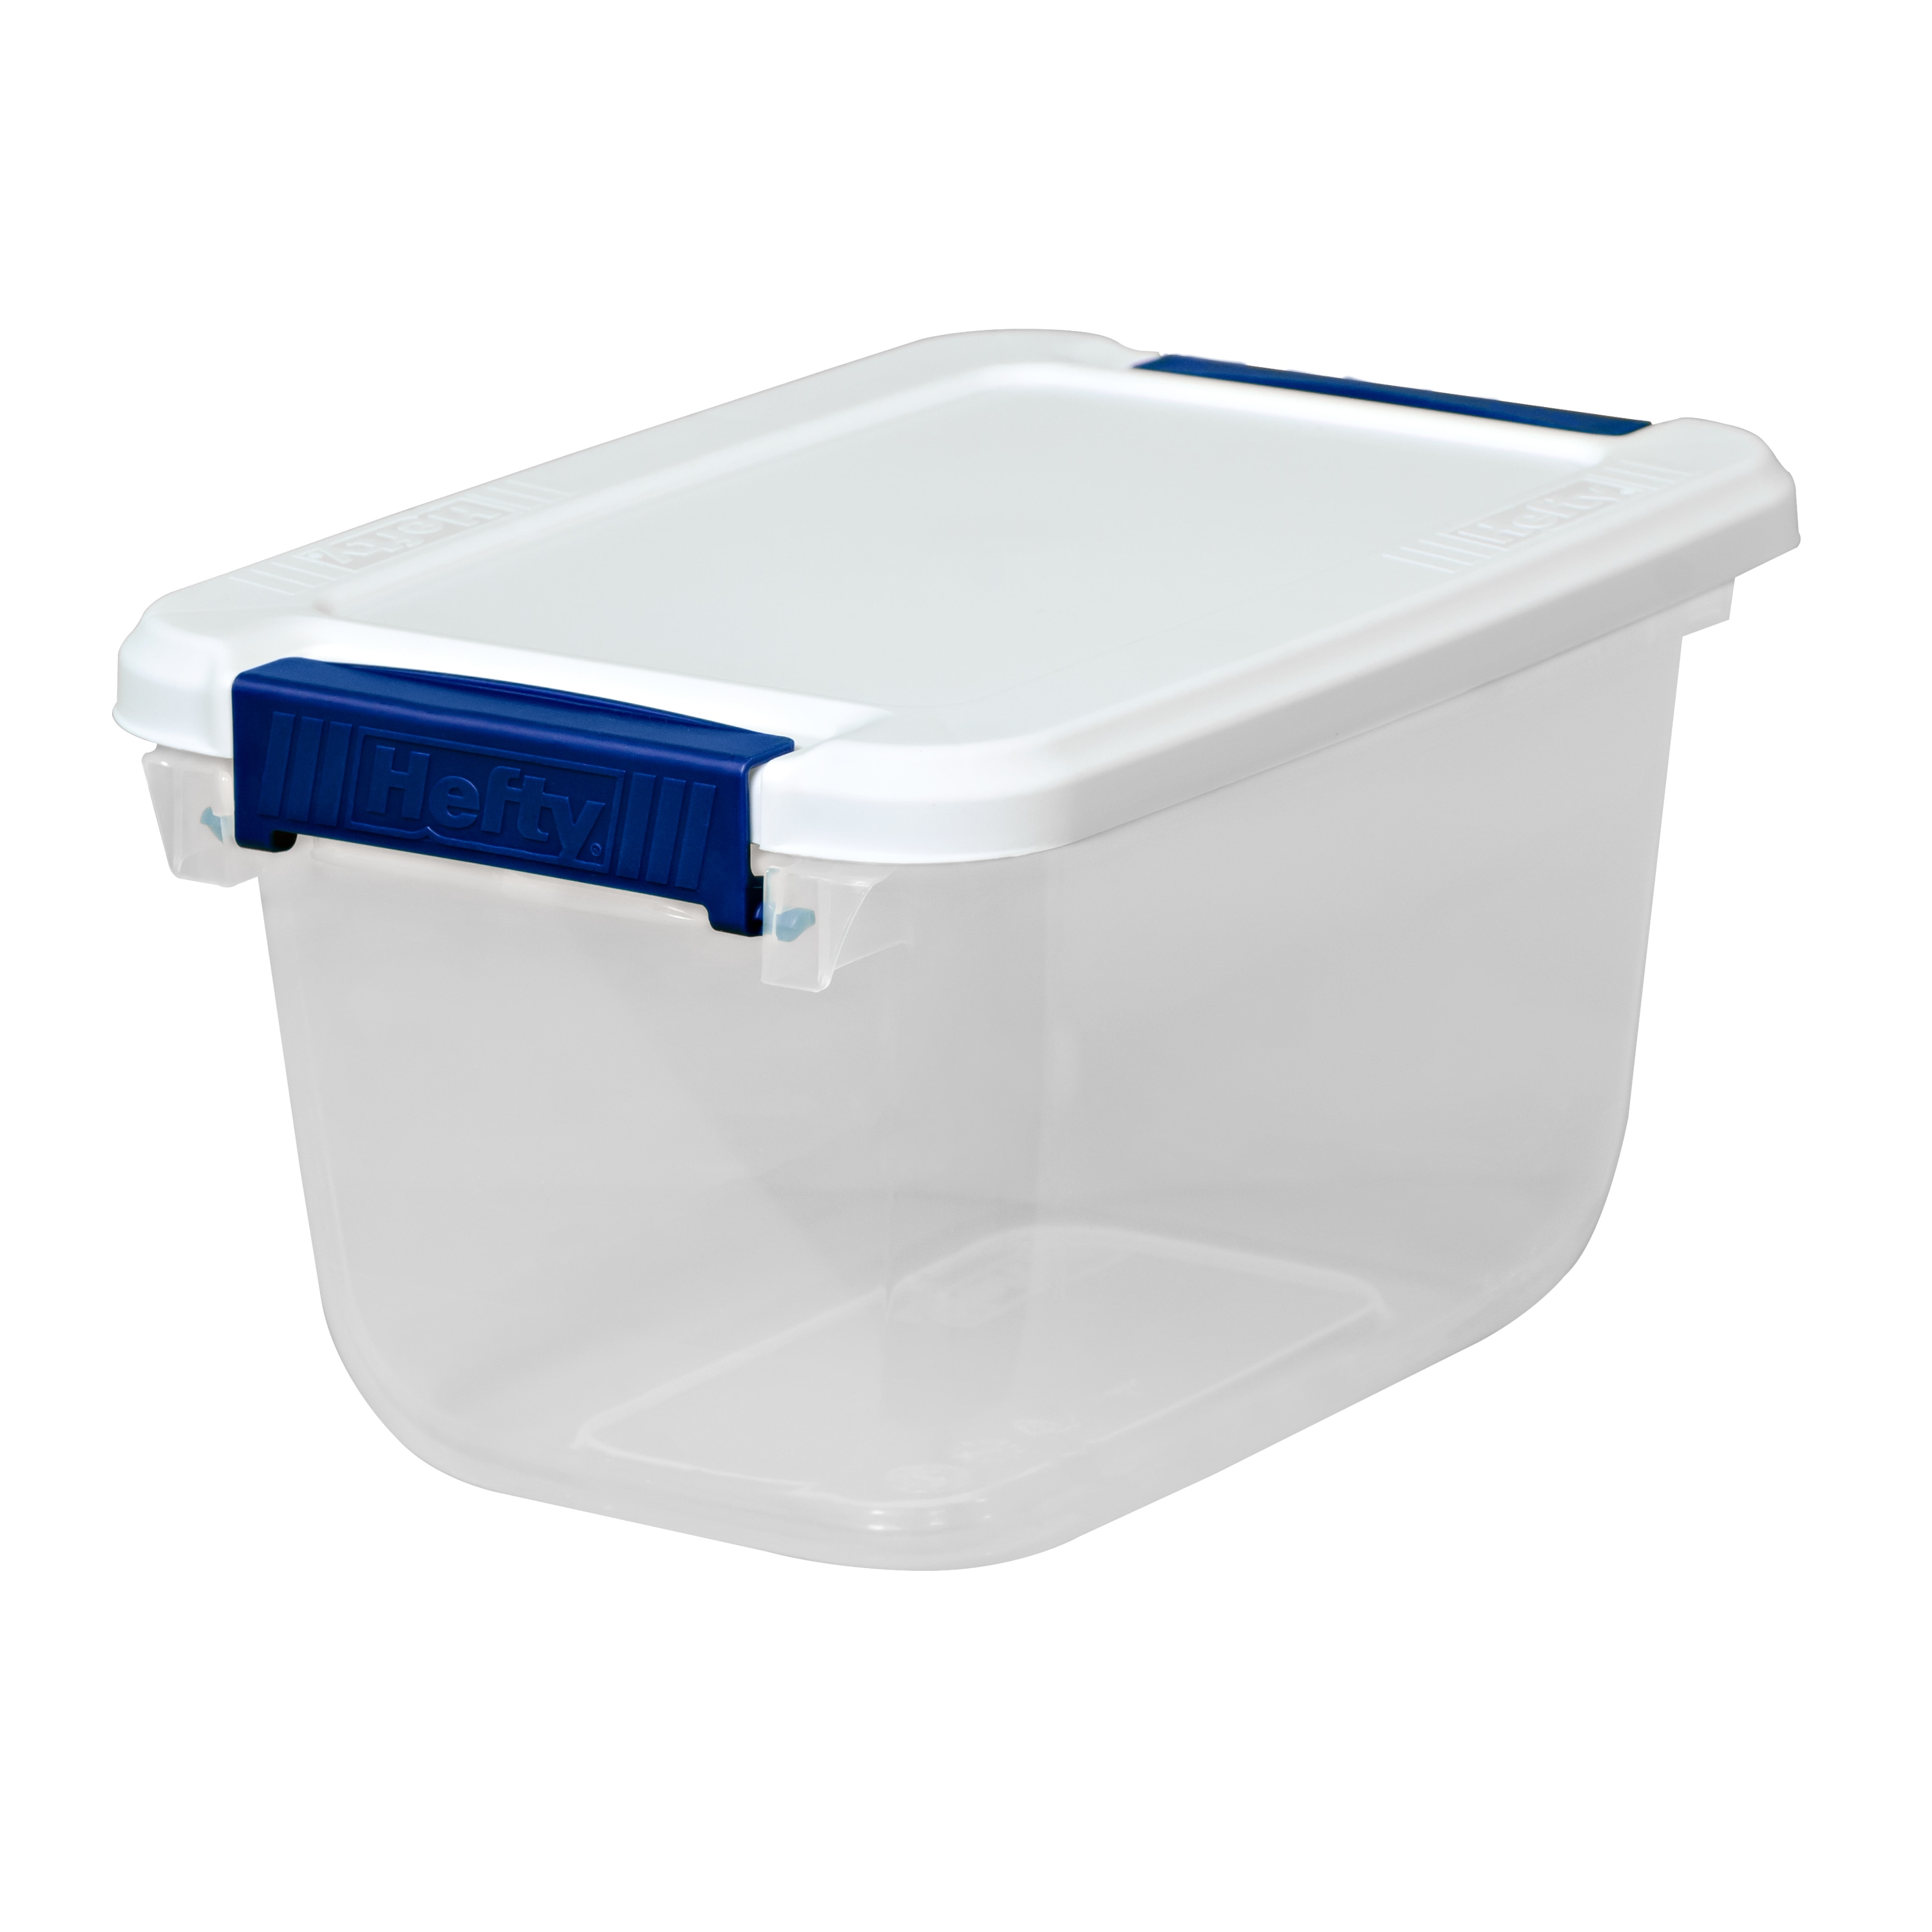  Hefty HI-RISE Clear Plastic Bin with Smoke Blue Lid (6